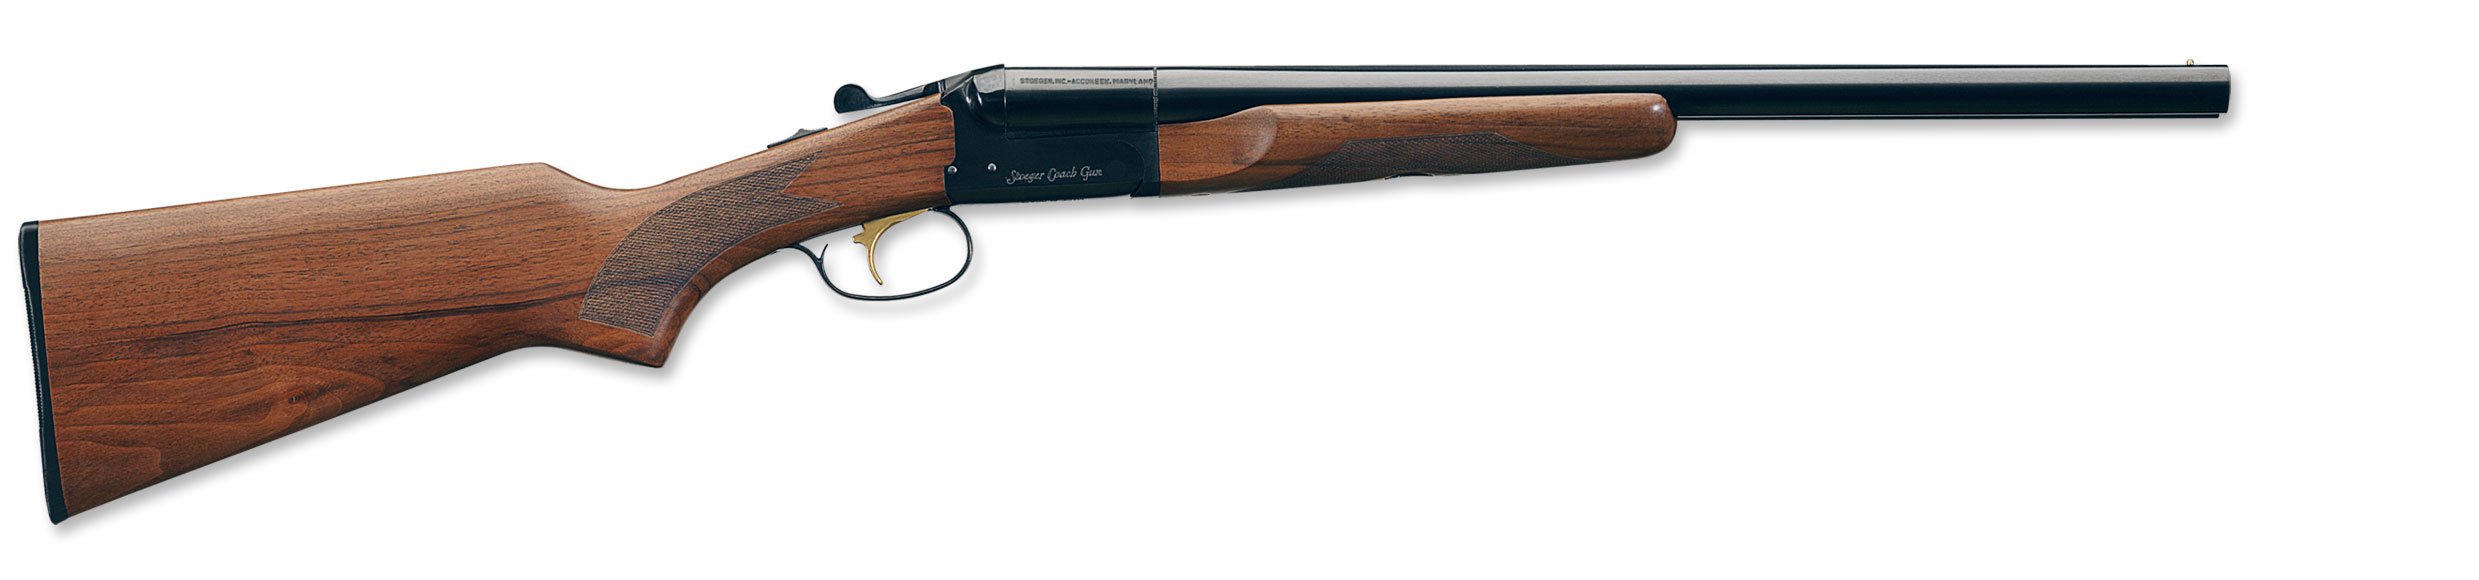 Stoeger Coach Gun 20 Ga 20 Blue Shotgun Single Trigger, Walnut Stock